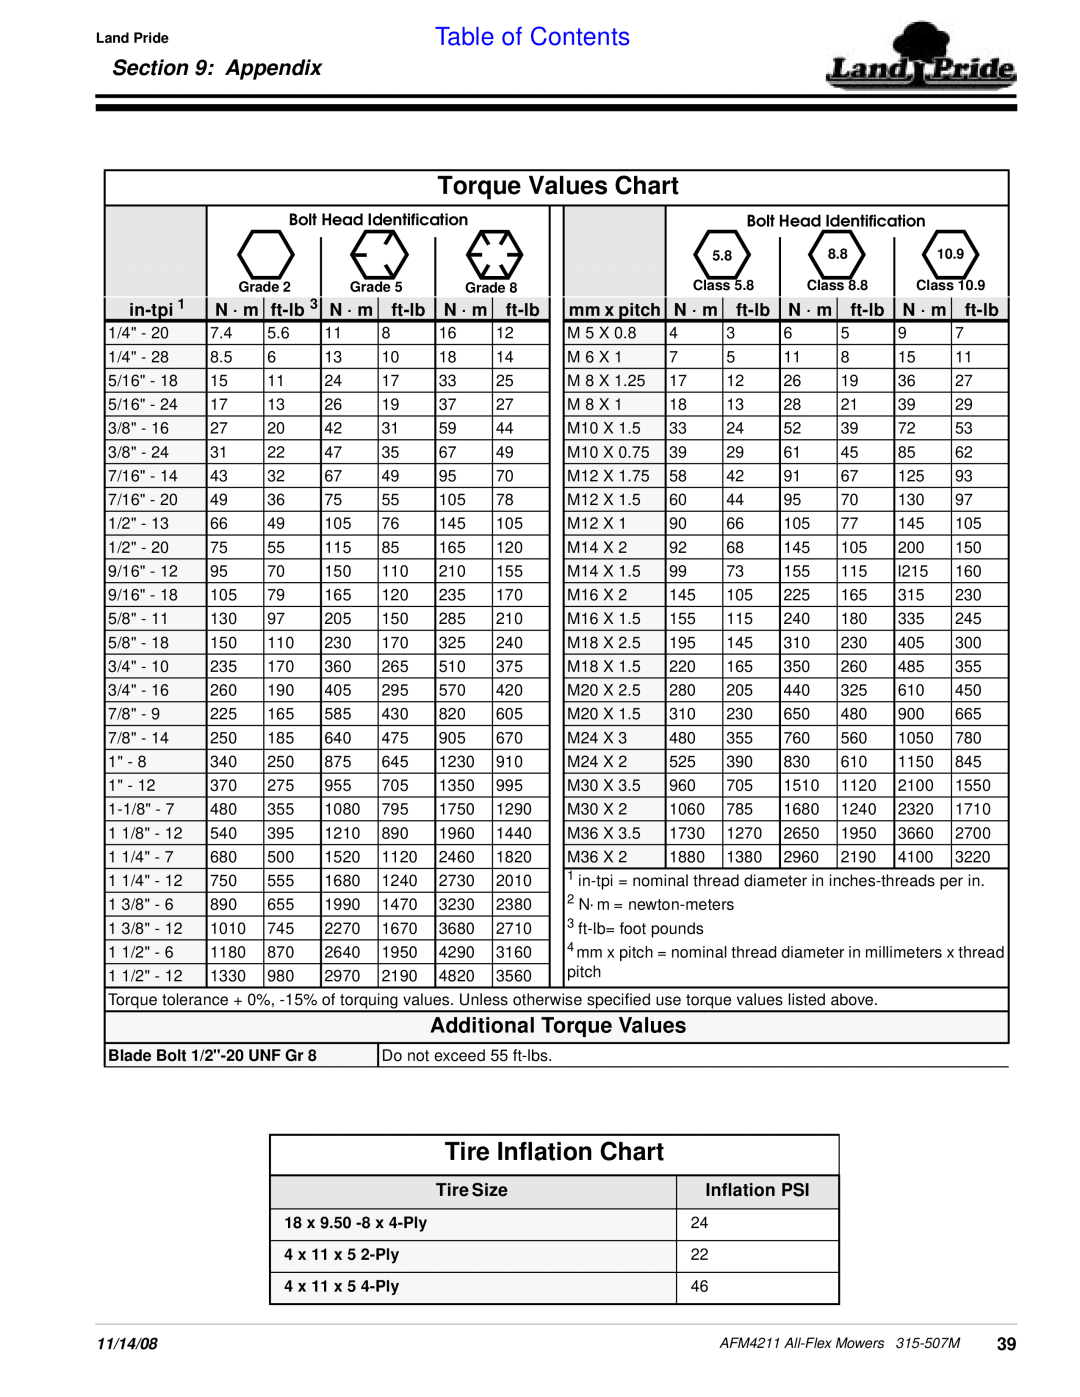 Land Pride AFM4211 Torque Values Chart, Tire Inflation Chart, Appendix, Additional Torque Values, in-tpi, N · m, ft-lb 